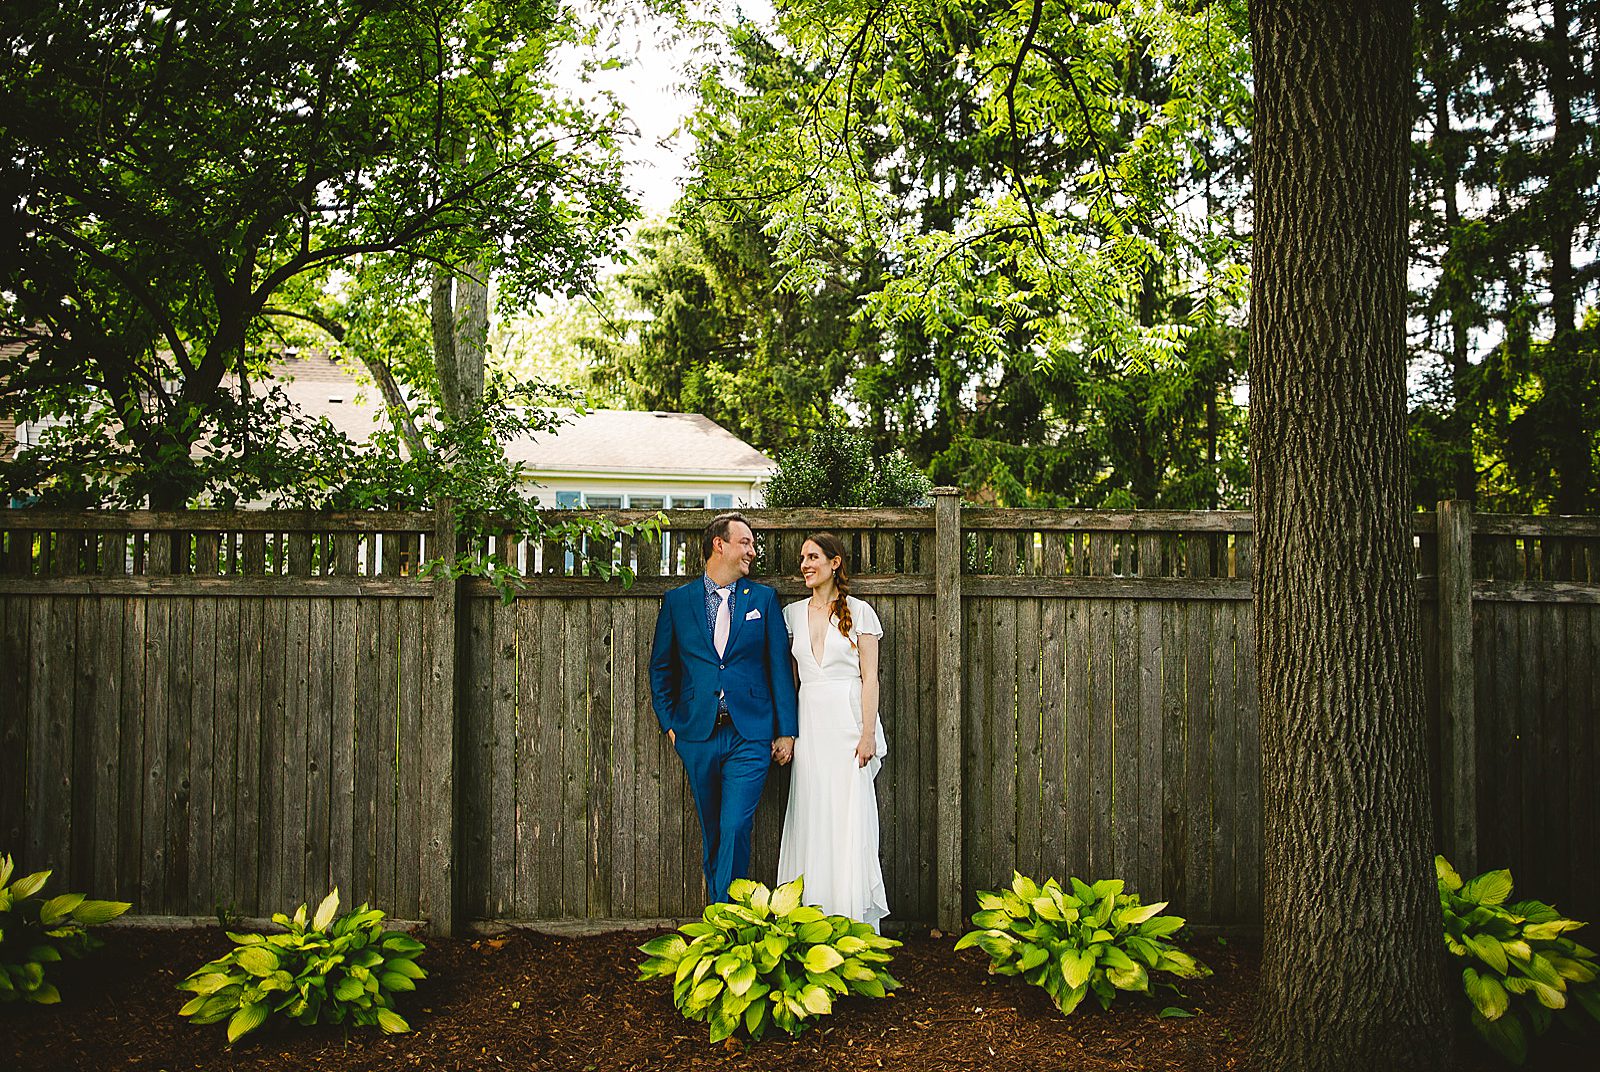 09 backyard wedding photos in chicago - Amazing Wedding in Backyard // Kristen + Jeff